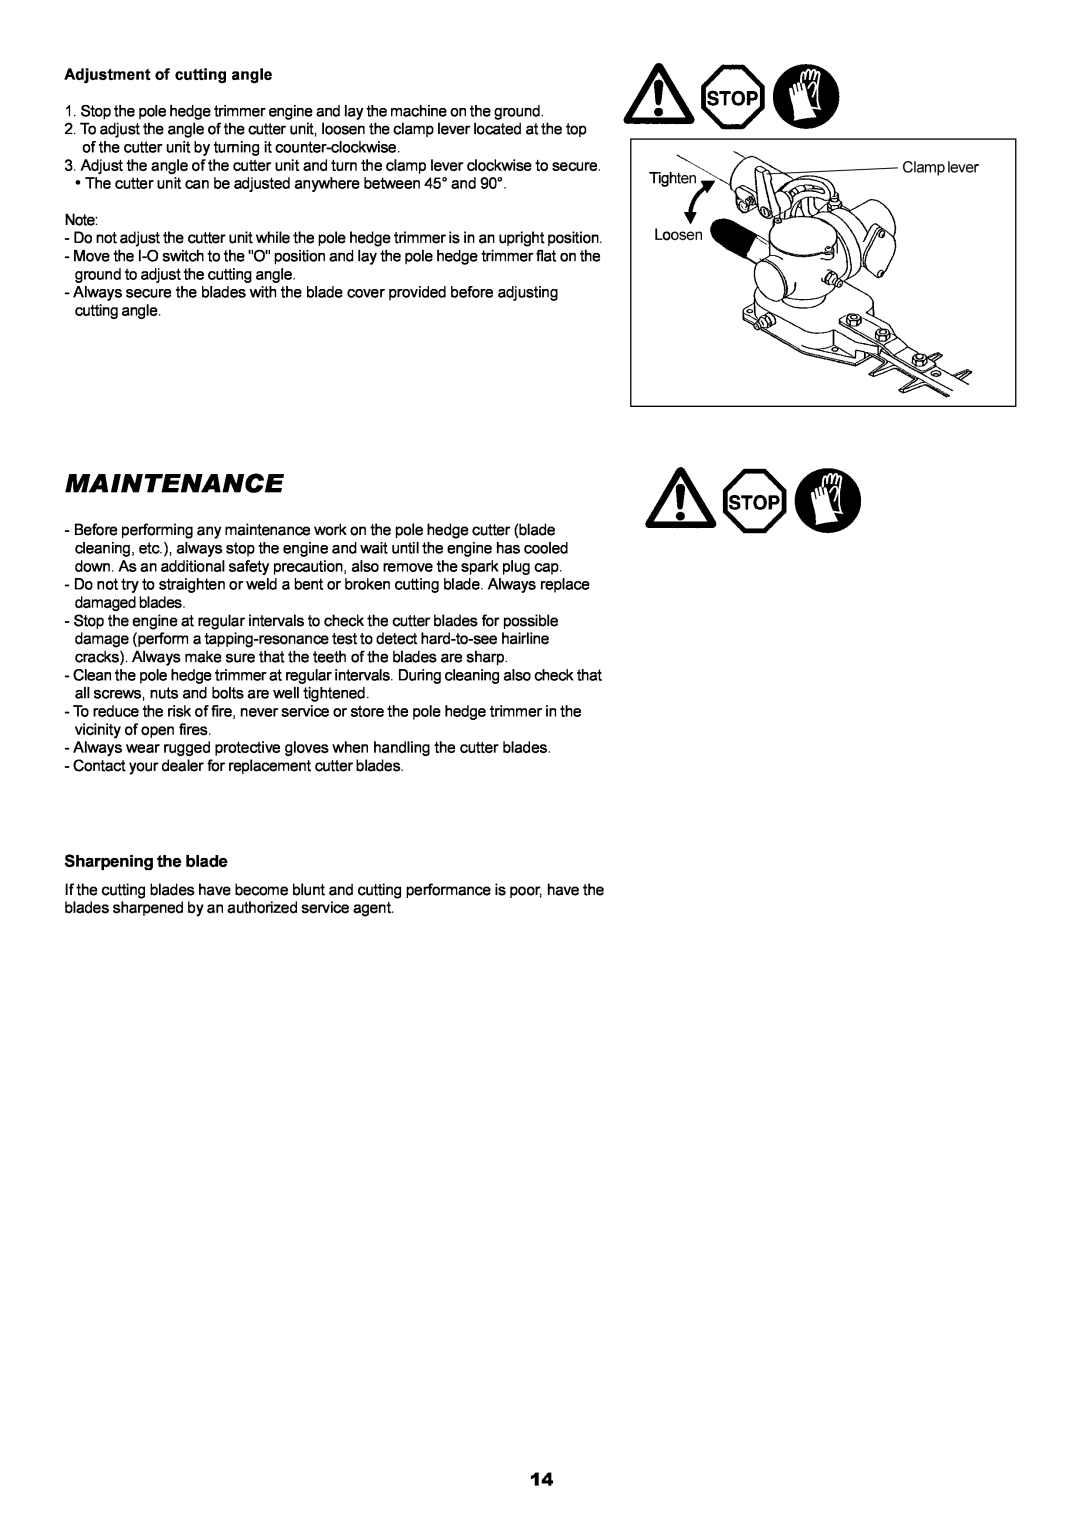 Dolmar MH-2556 instruction manual Maintenance, Sharpening the blade 